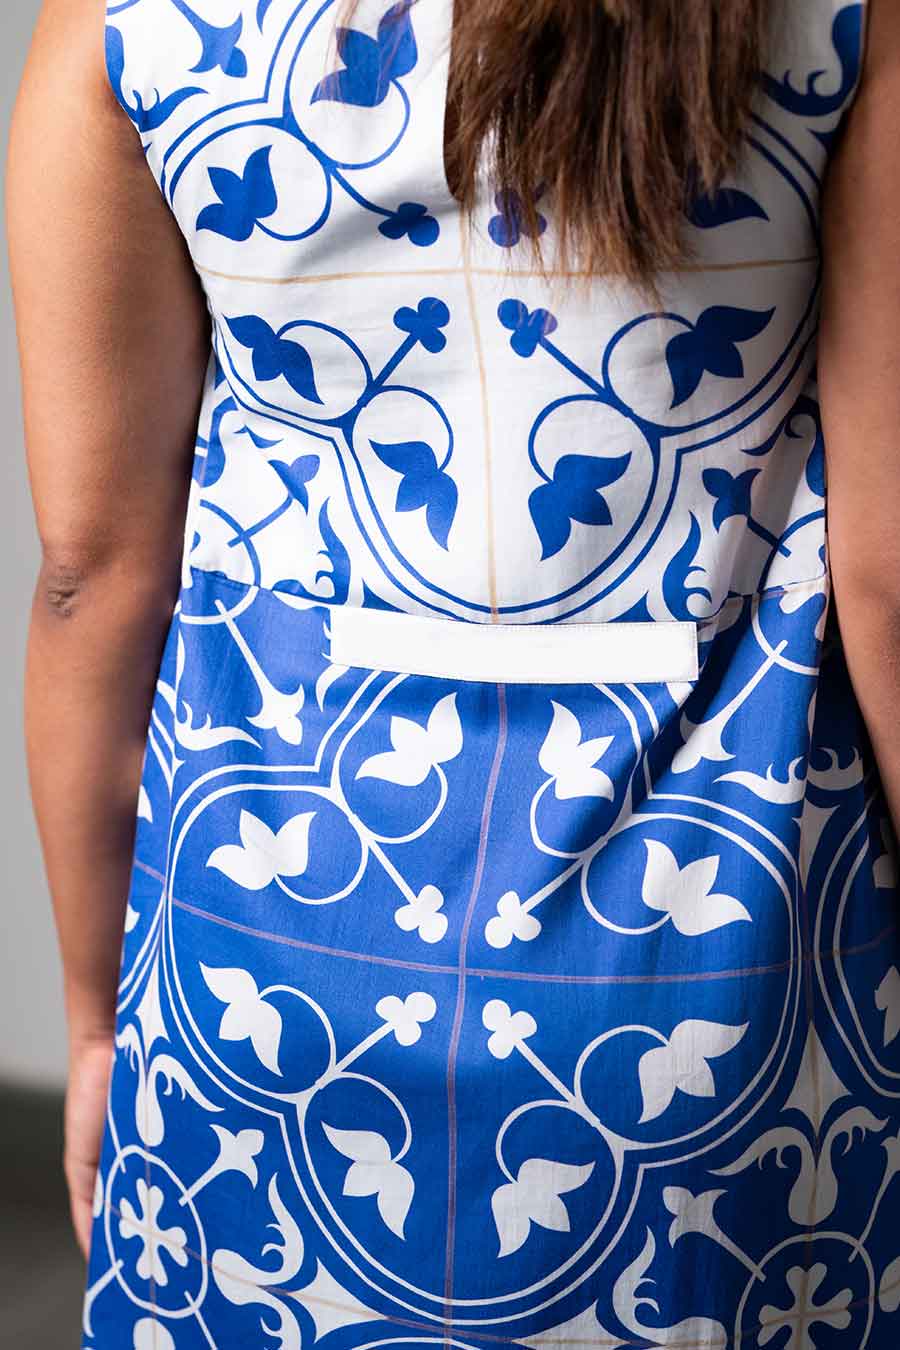 White Printed Azulejos Dress